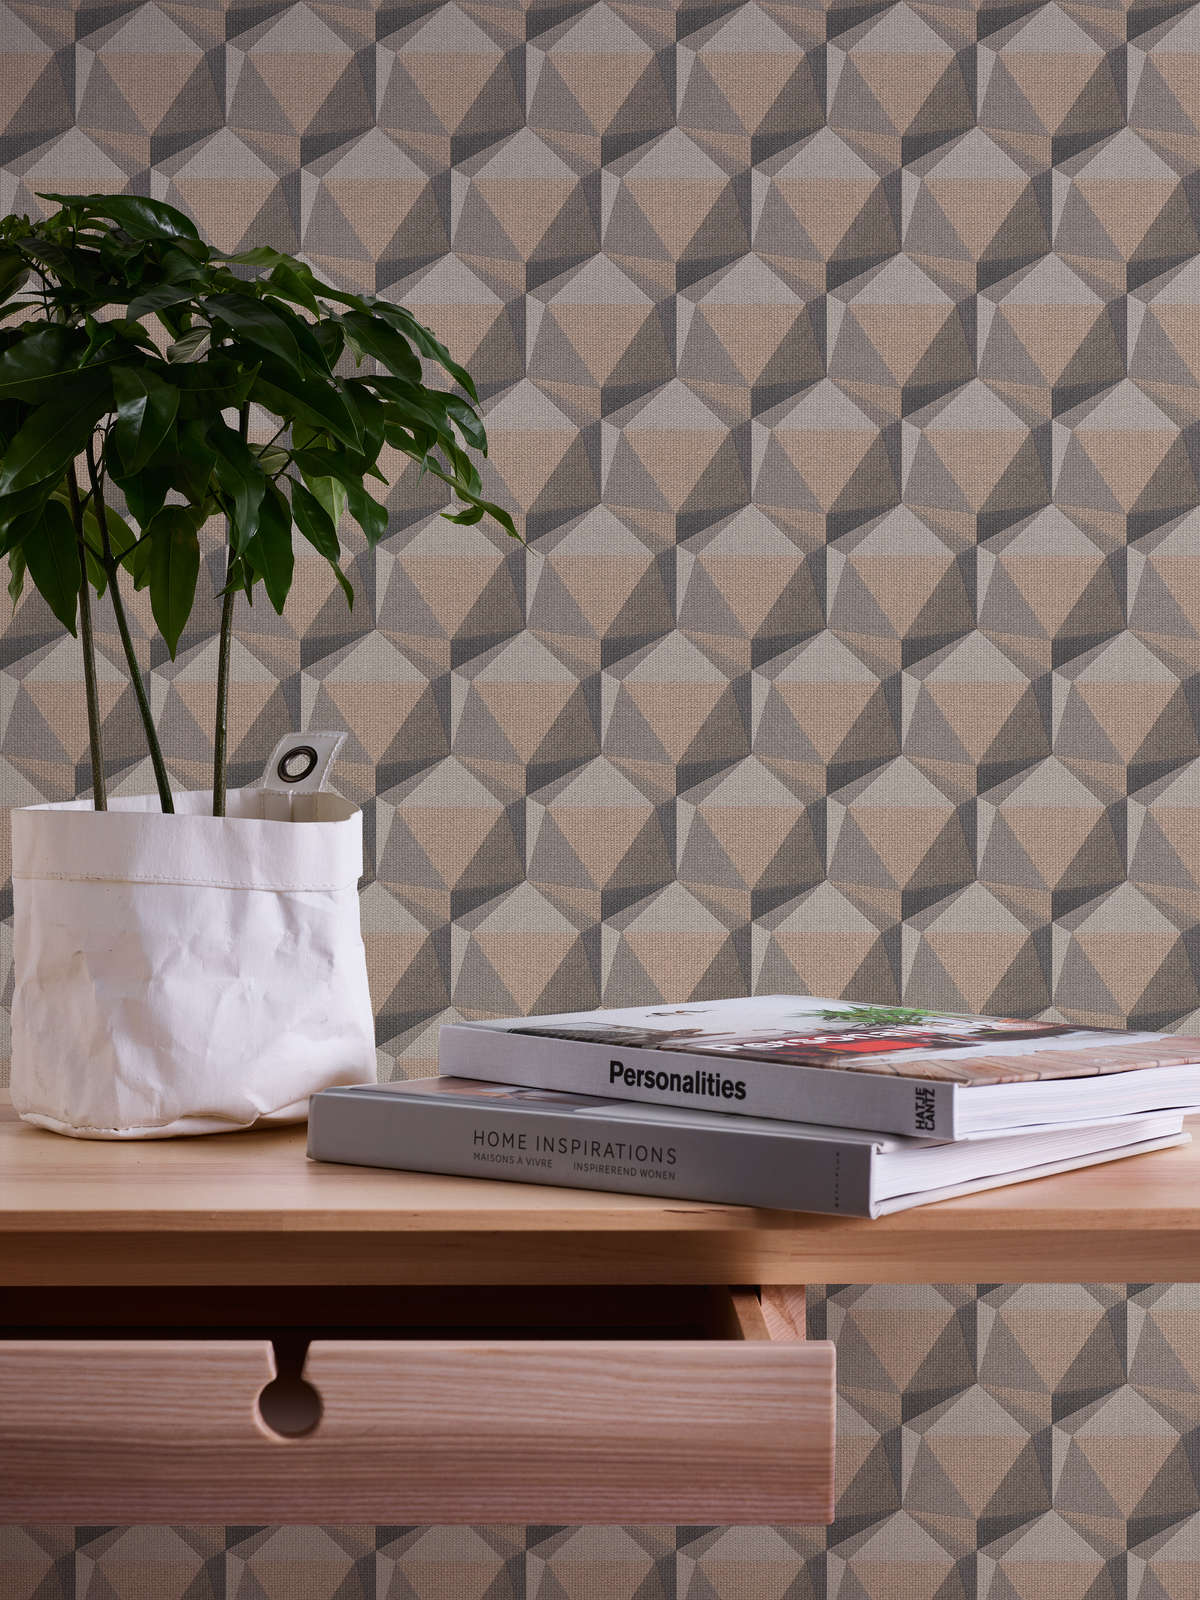             3D wallpaper with graphic pattern in retro look - beige, cream, grey
        